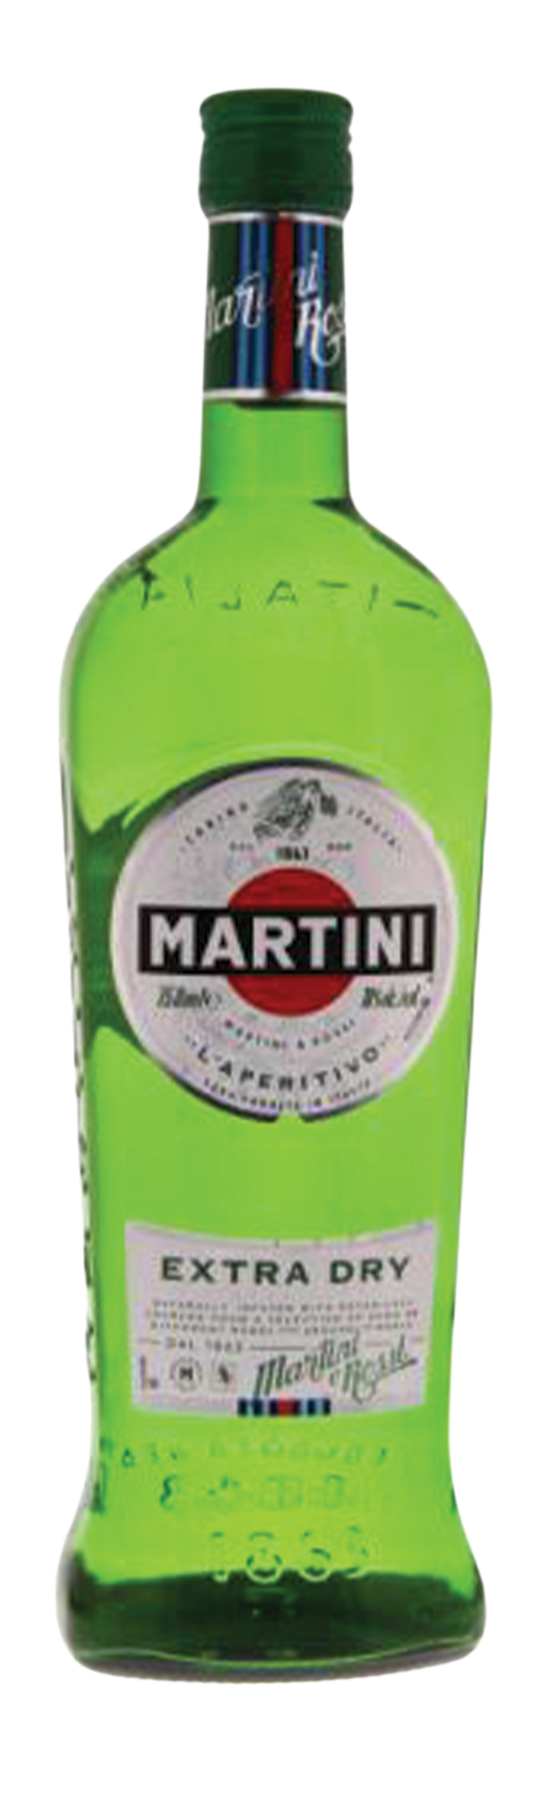 Martini Dry 18% 75cl